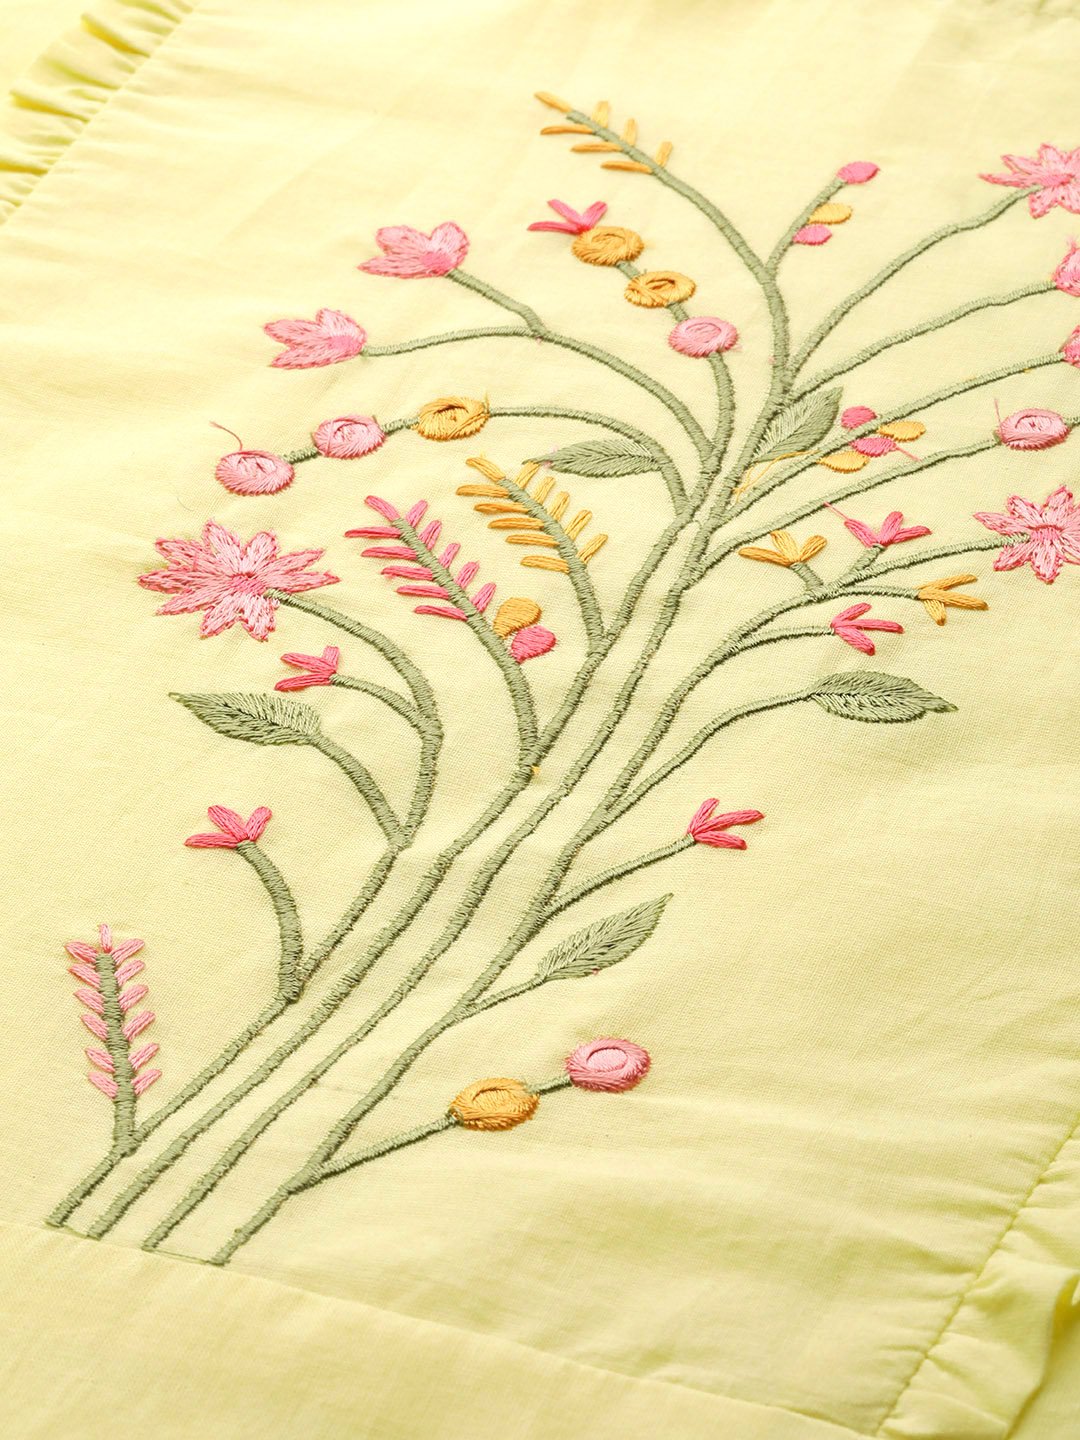 Women's Yellow & Pink Embroidered Kurta With Palazzos & Dupatta - Nayo Clothing